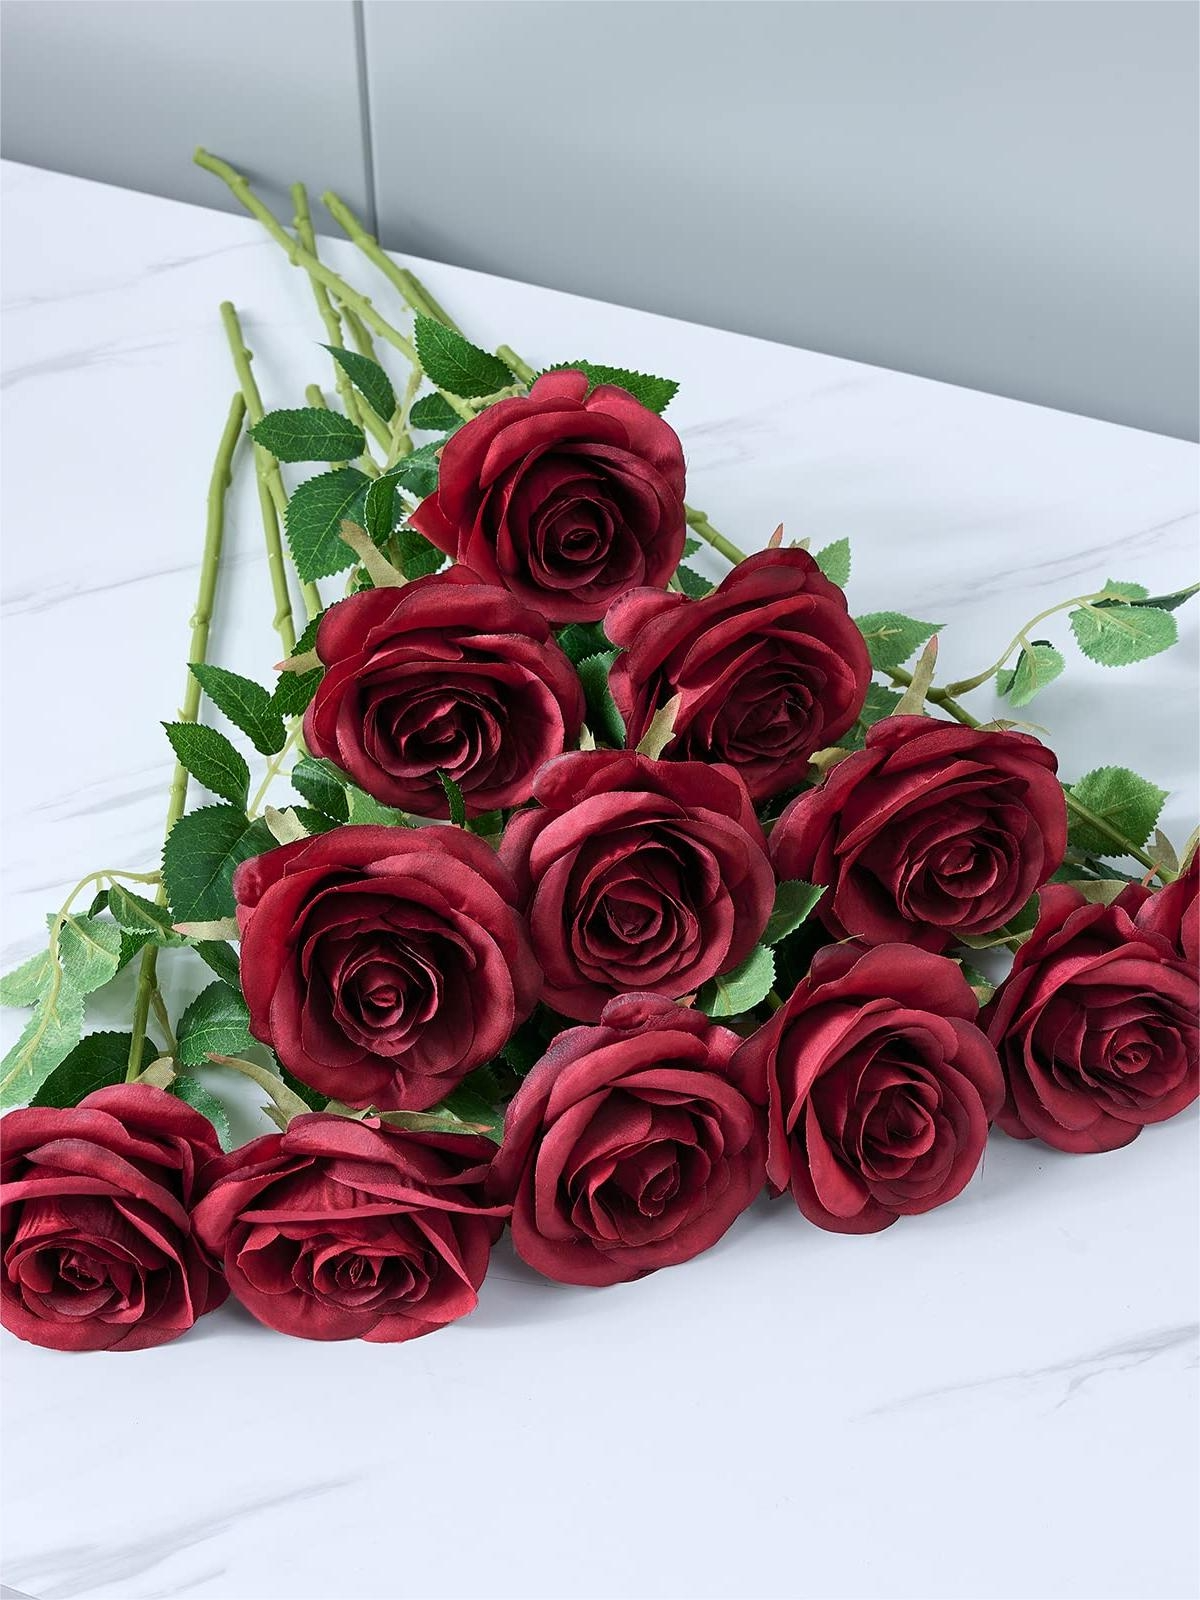 Artificial Rose Flowers With Long Stems Wedding Bouquet Centerpieces Decorations HH8030